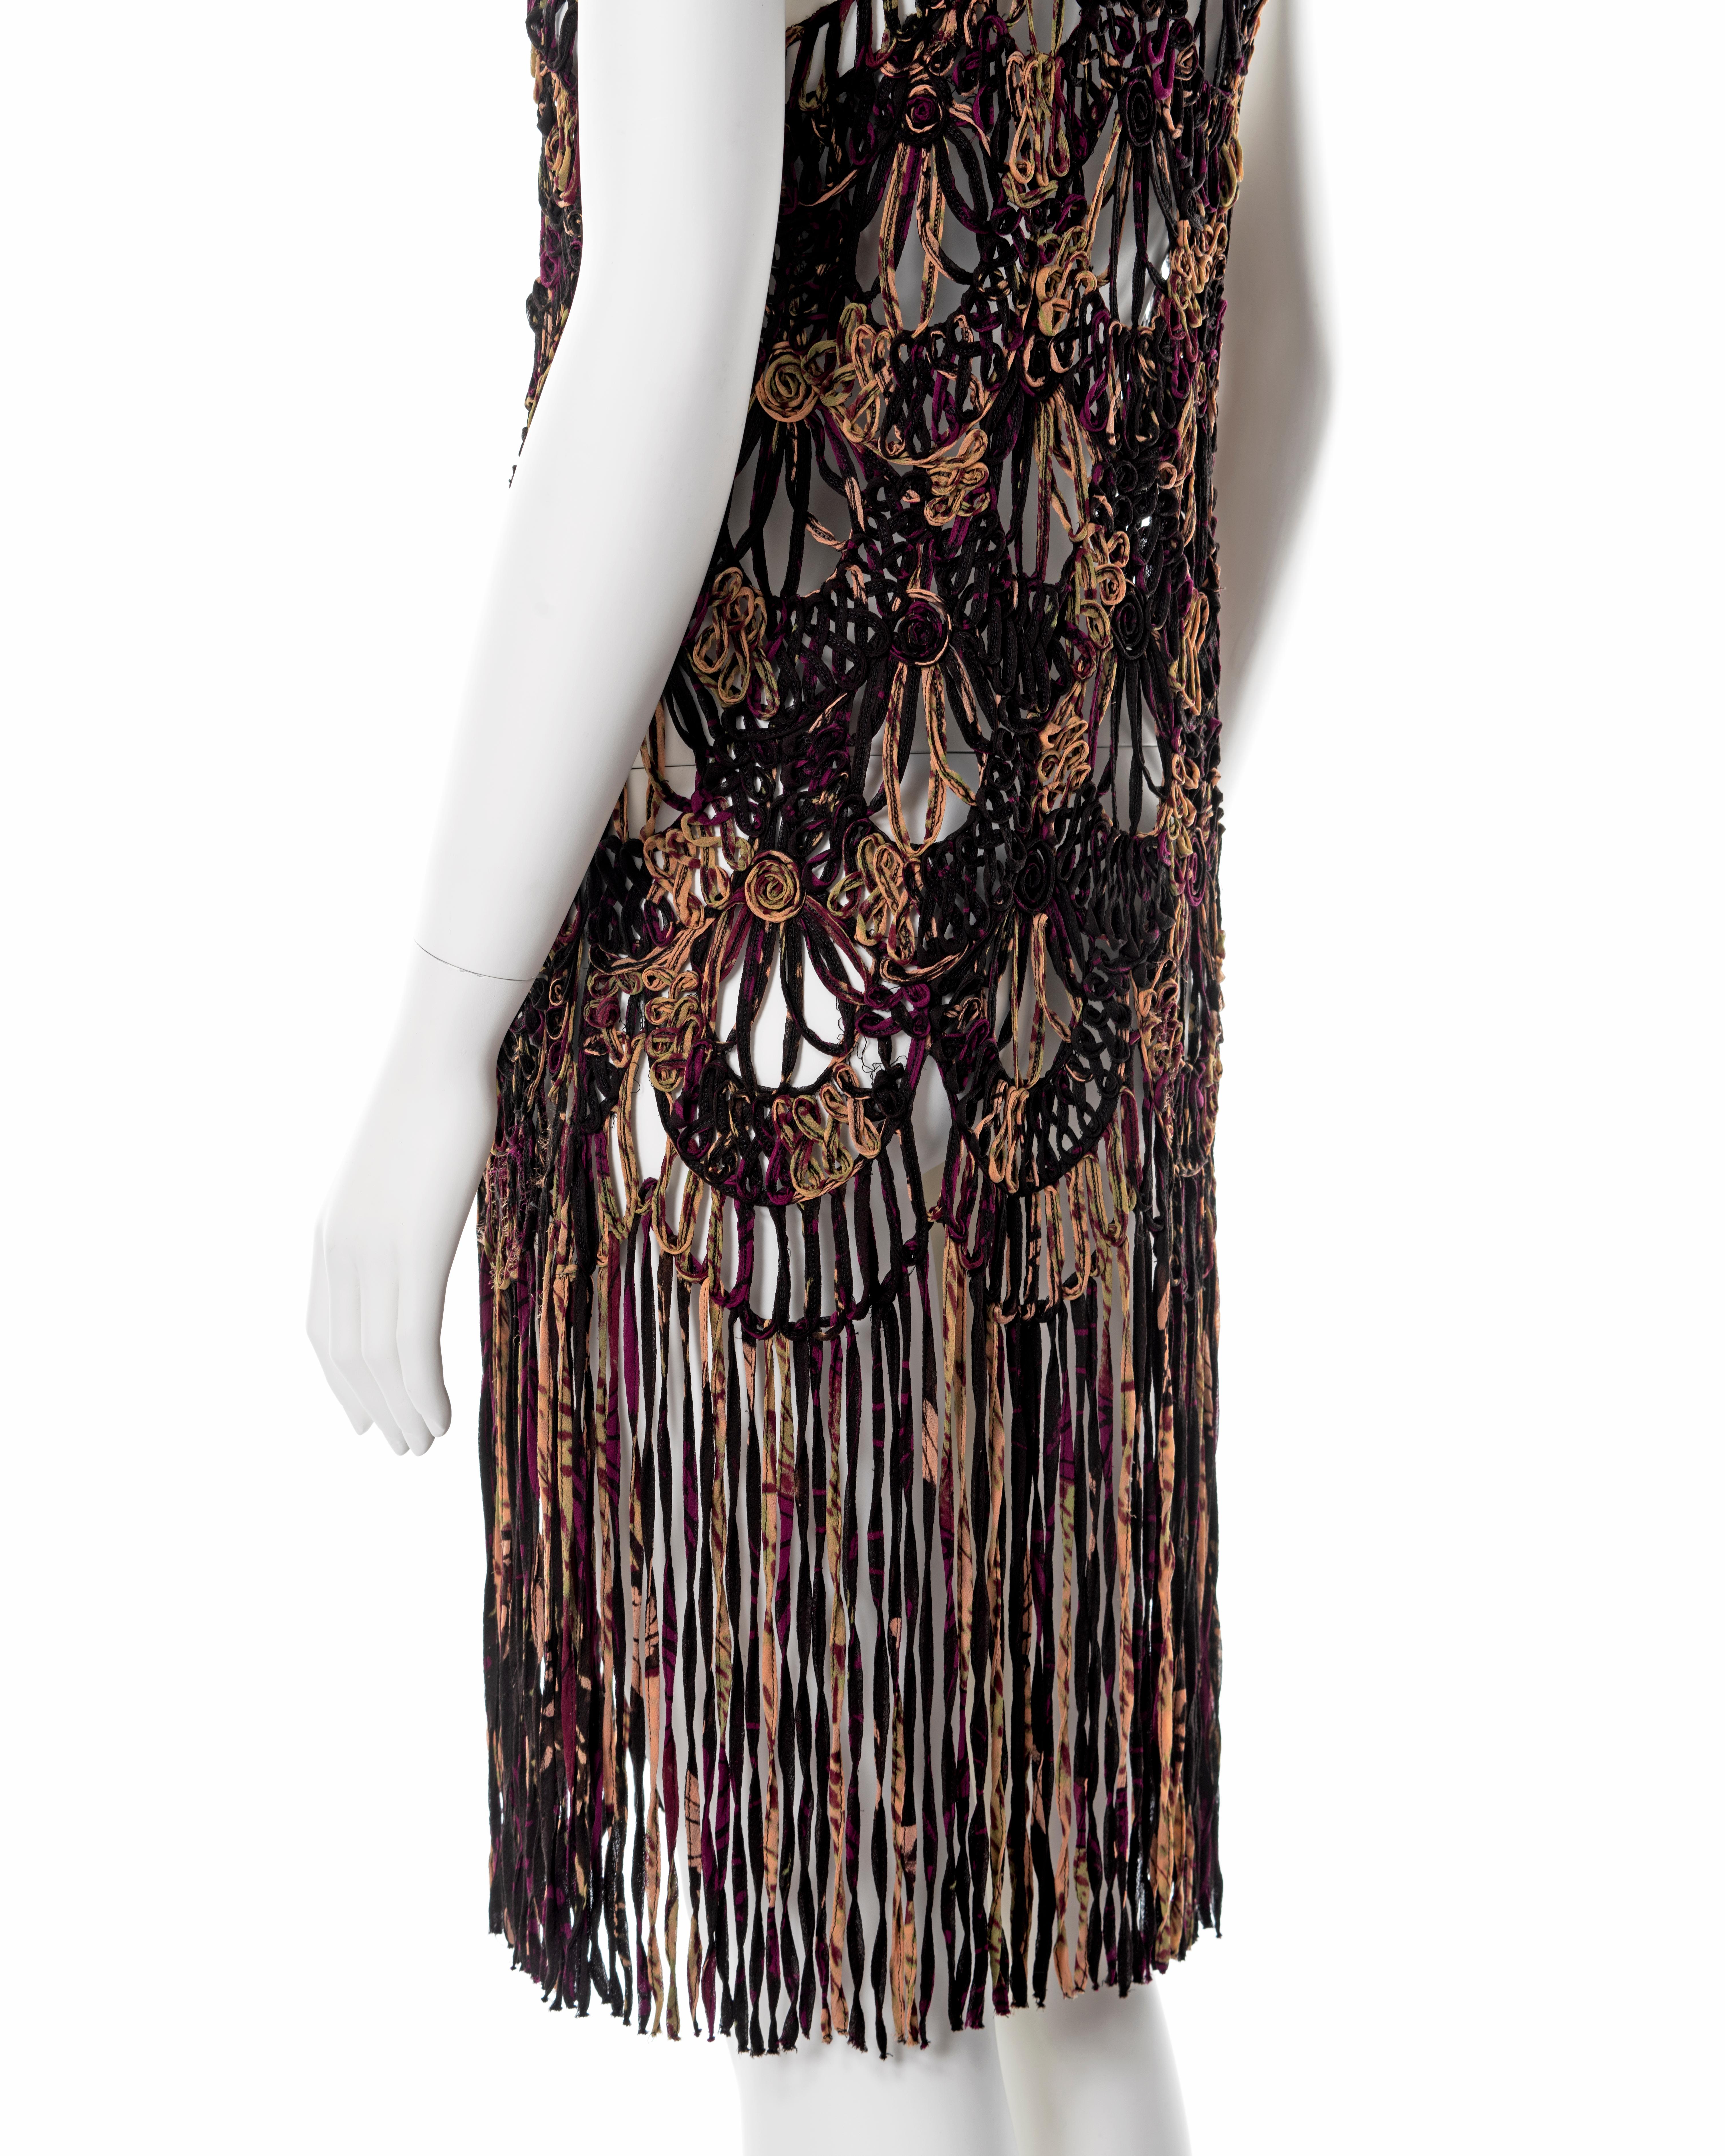 Jean Paul Gaultier fringed silk macramé dress, ss 2000 For Sale 2